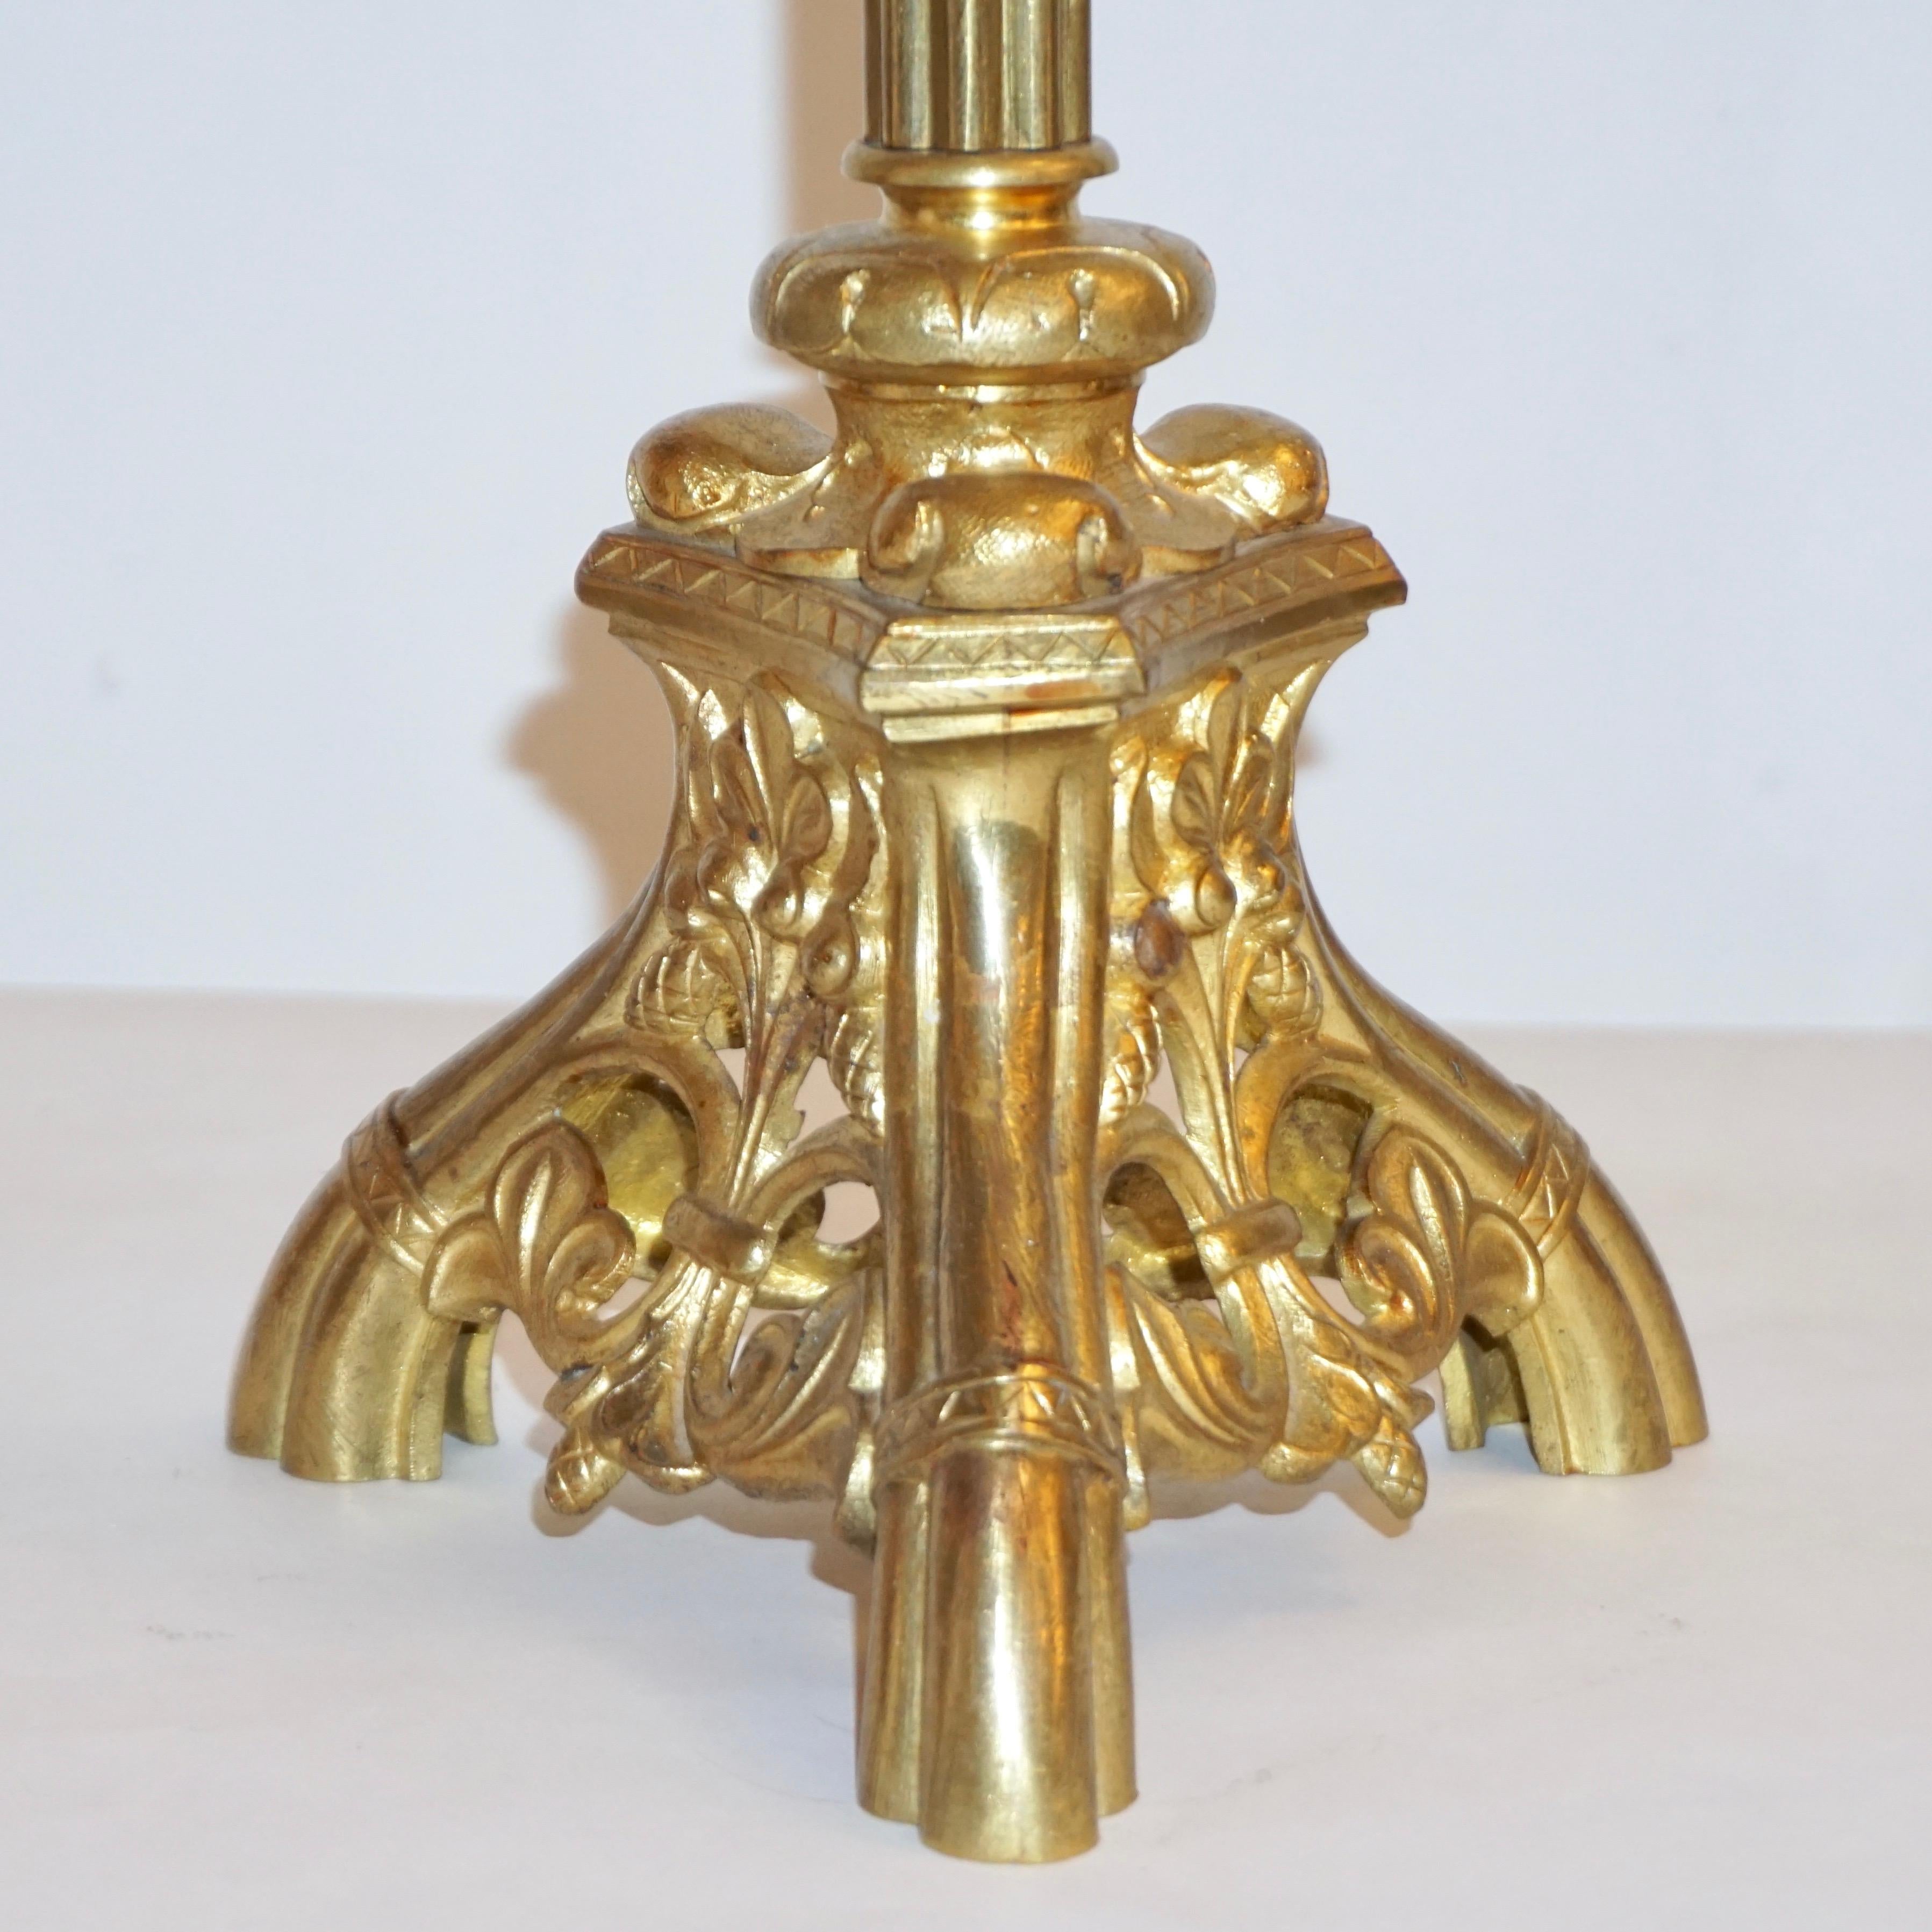 1880s French Baroque Revival Gilt Bronze Ormolu Pricket Candlestick 6